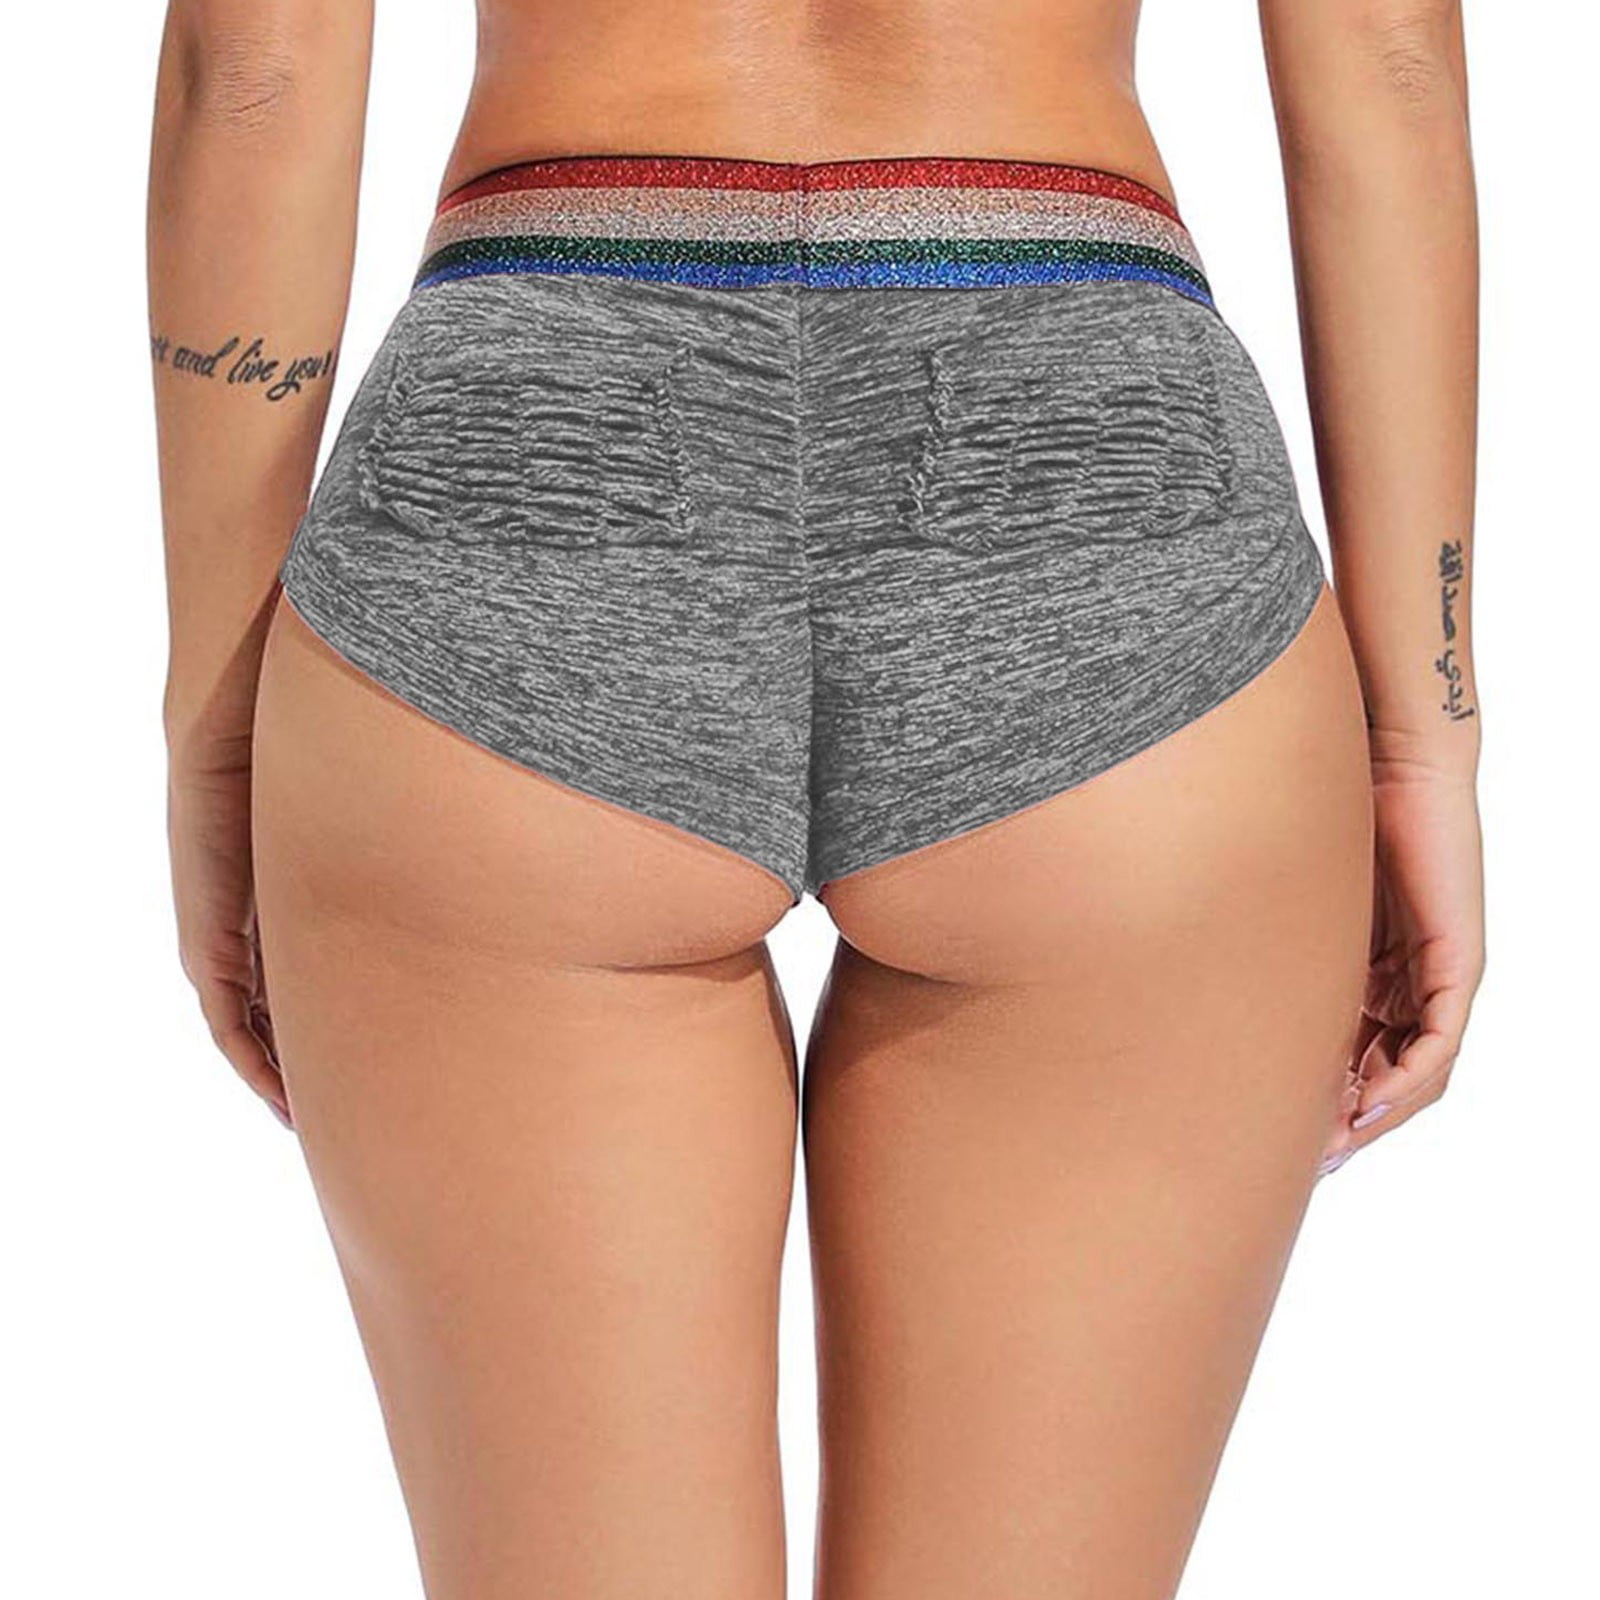 CROSS1946 Women's Seamless Sports Yoga Running Pole Shorts High Waist Tummy Control Cycling Shorts Summer Hot Pants